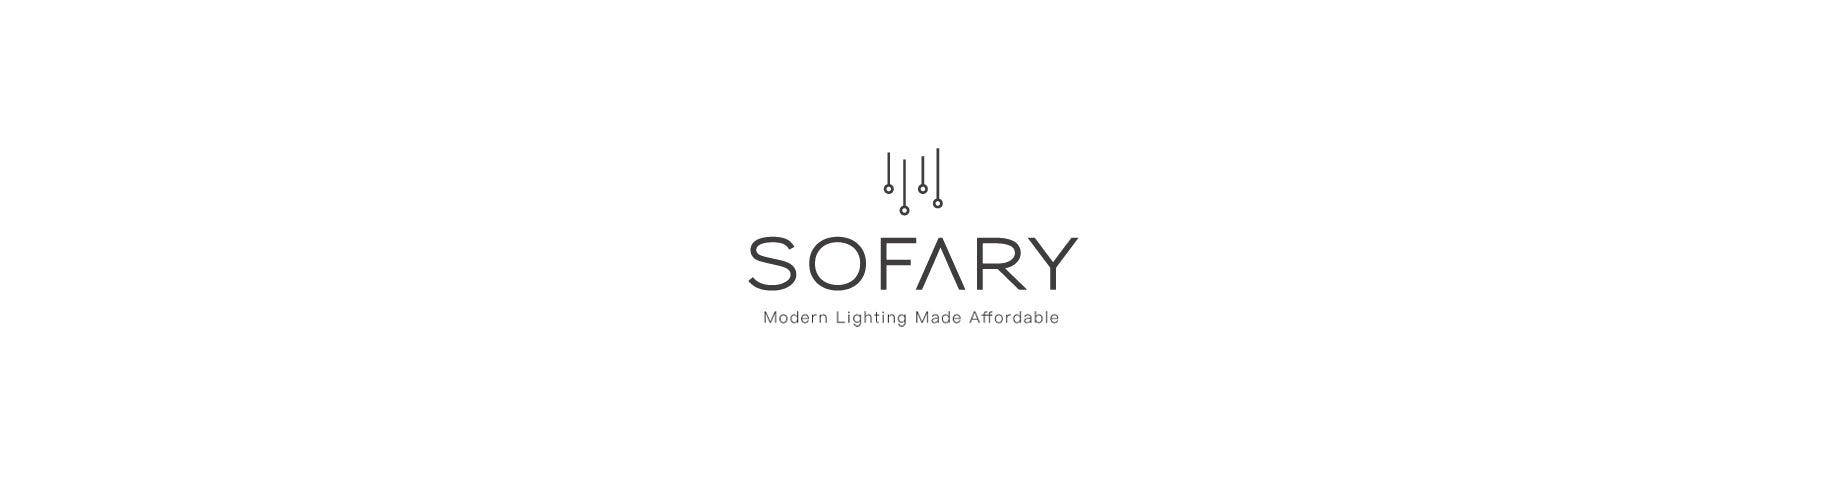 Modern Lighting Made Affordable - Sofary Lighting